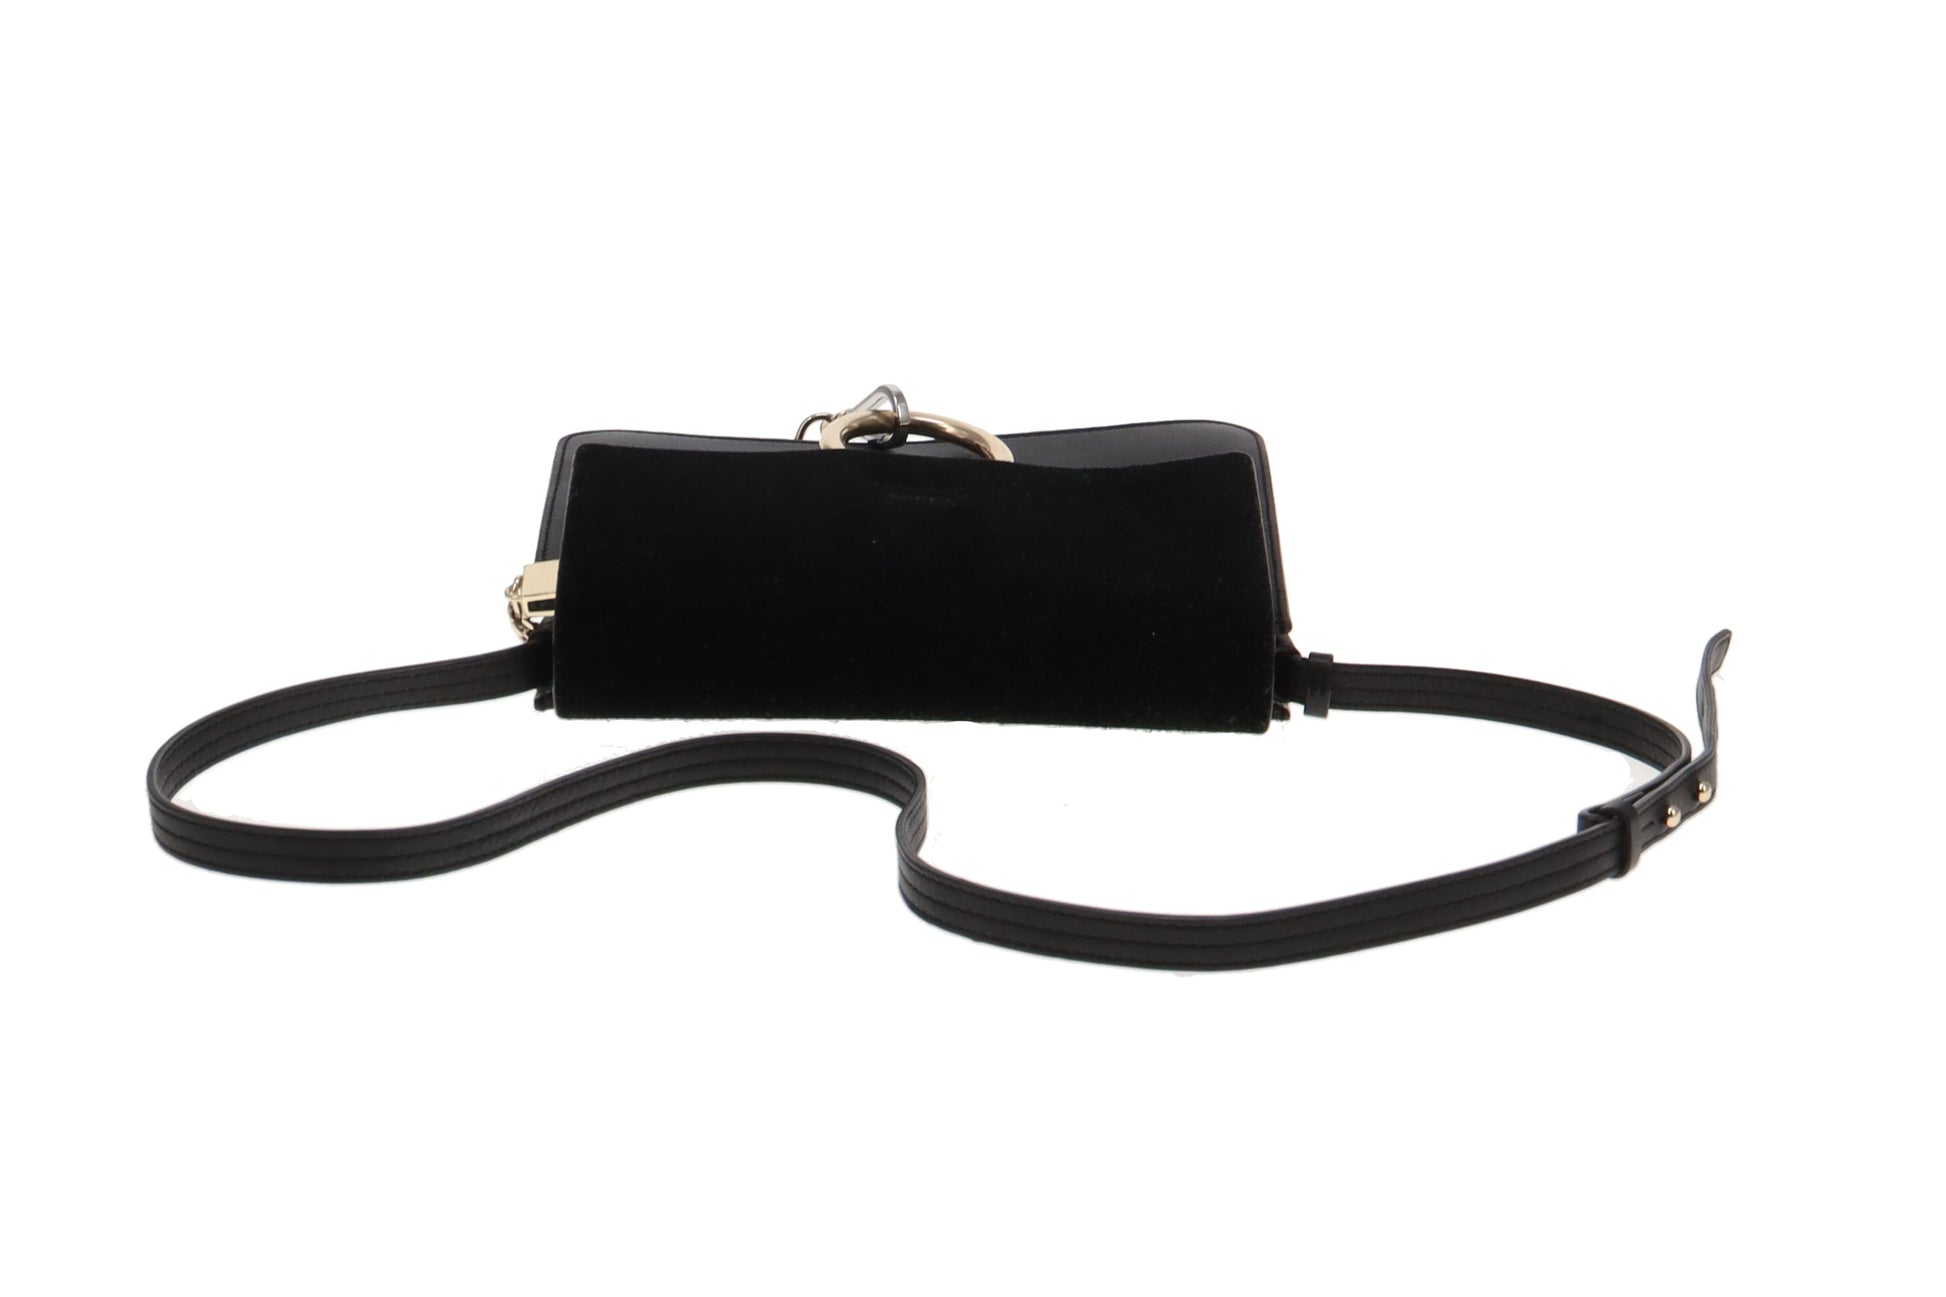 Chloé Faye Mini Chain Bag in Black